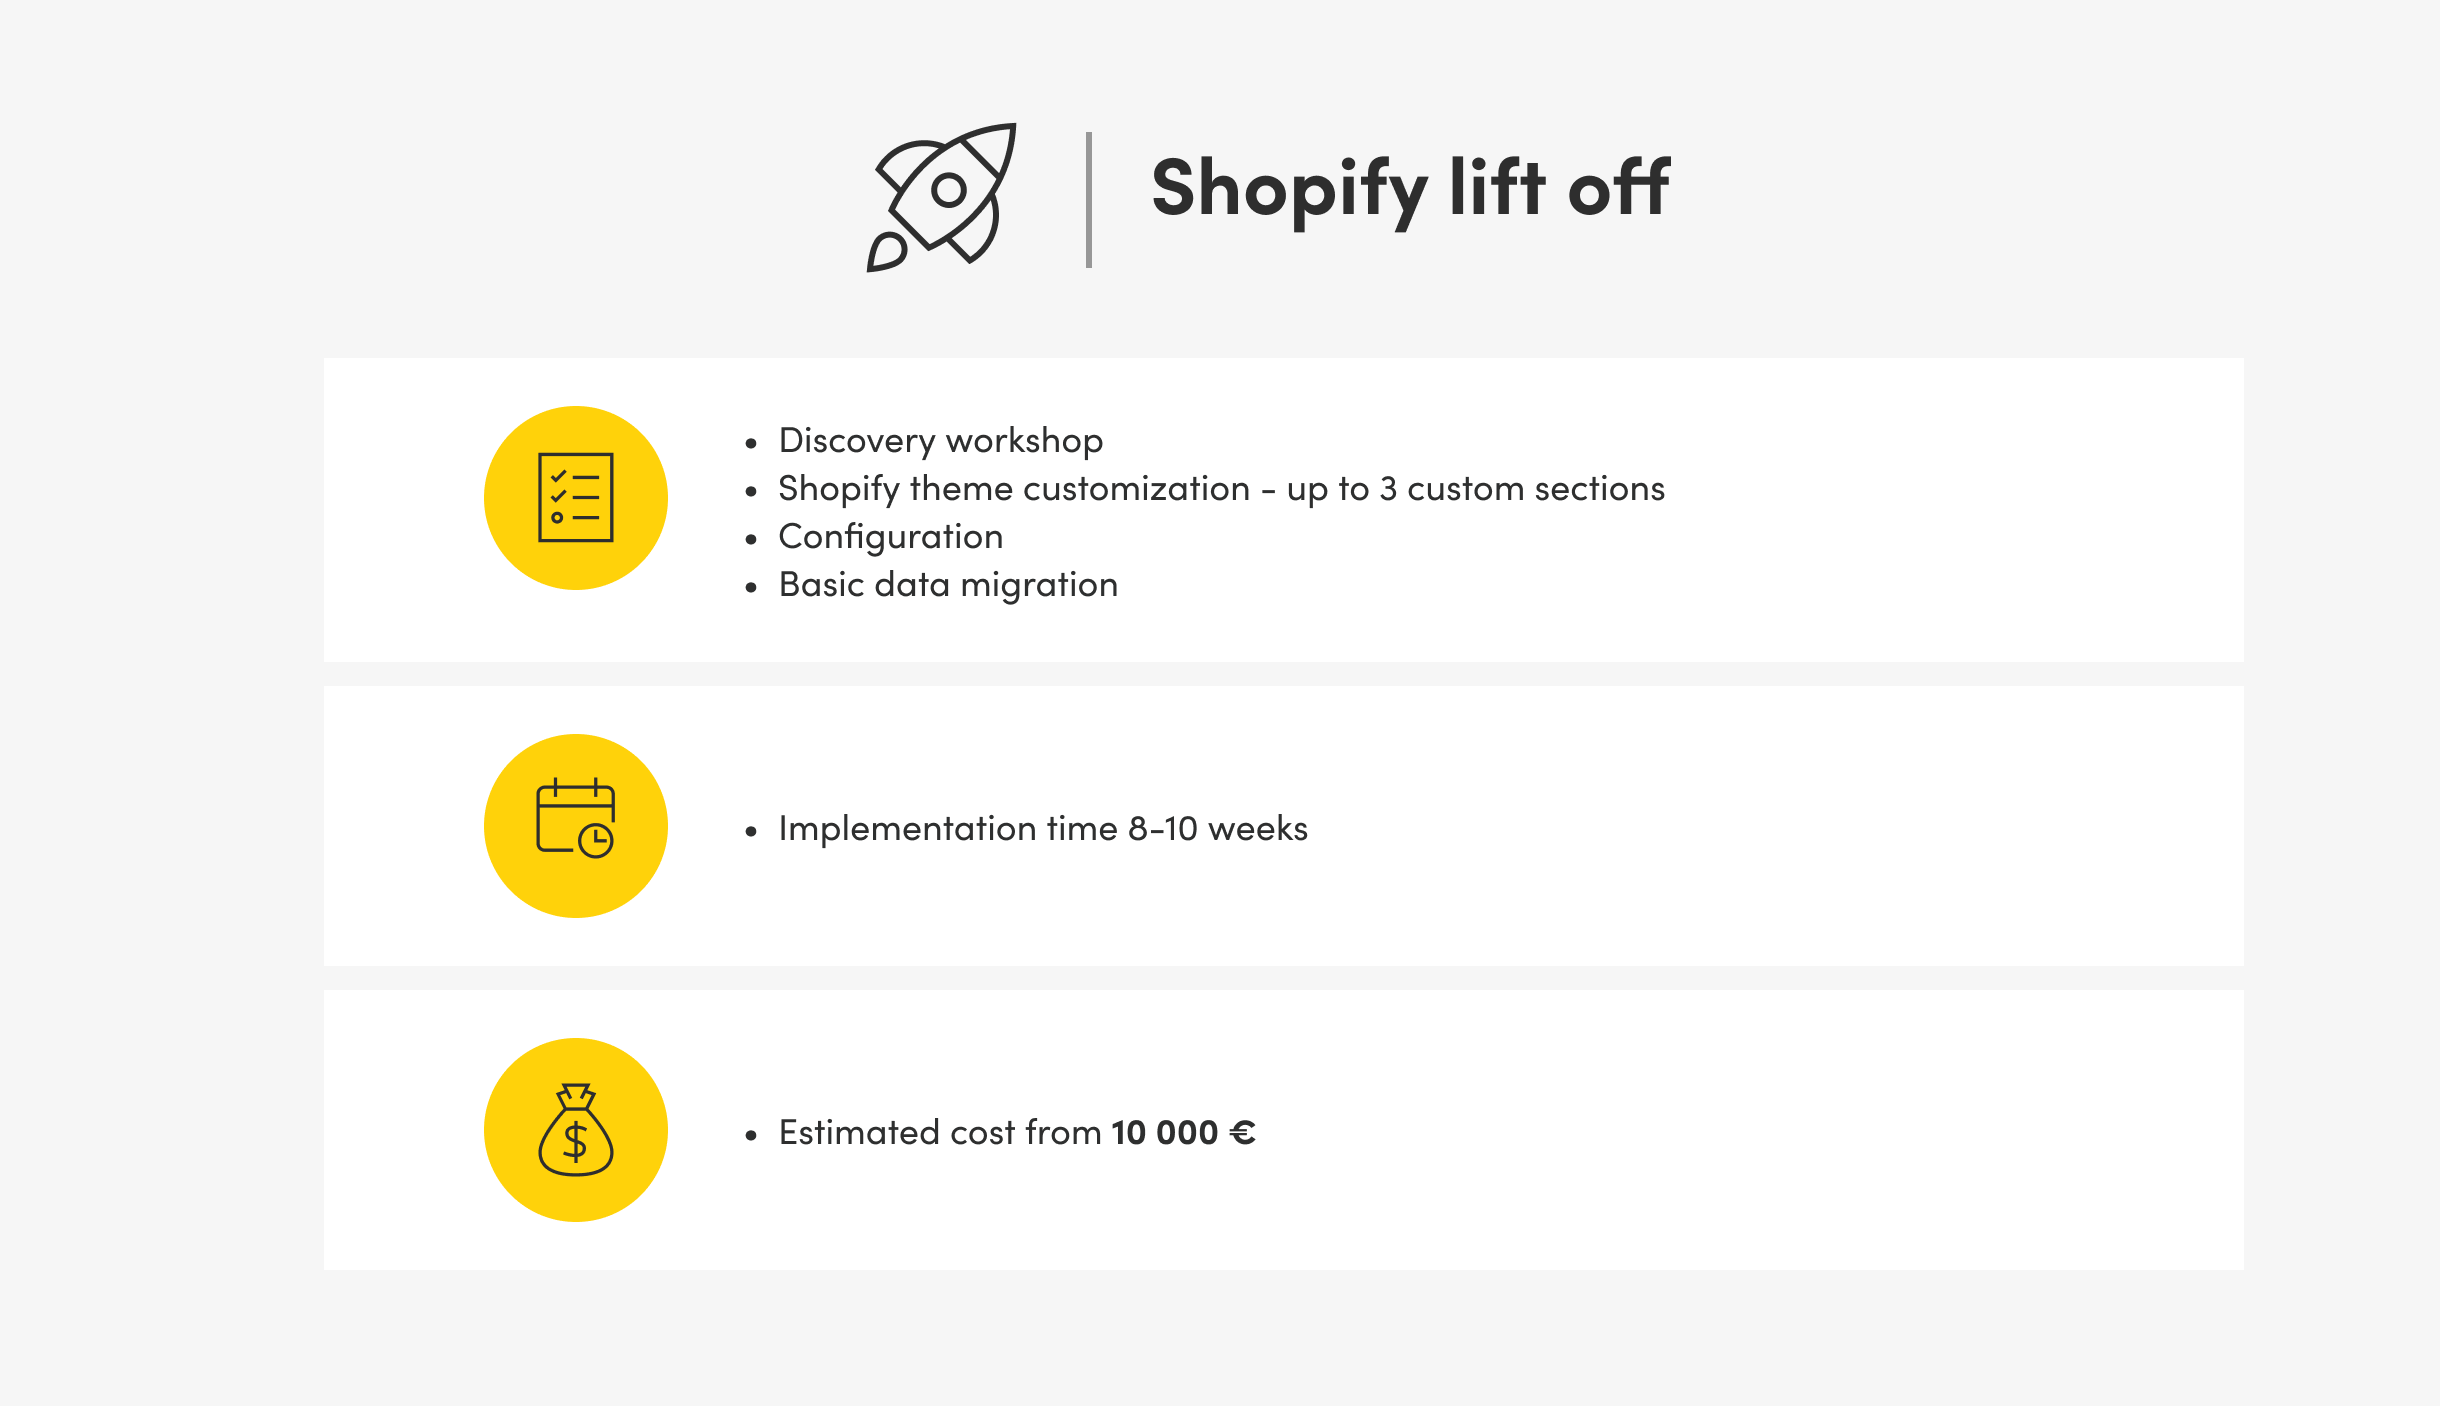 shopify lift off plan details